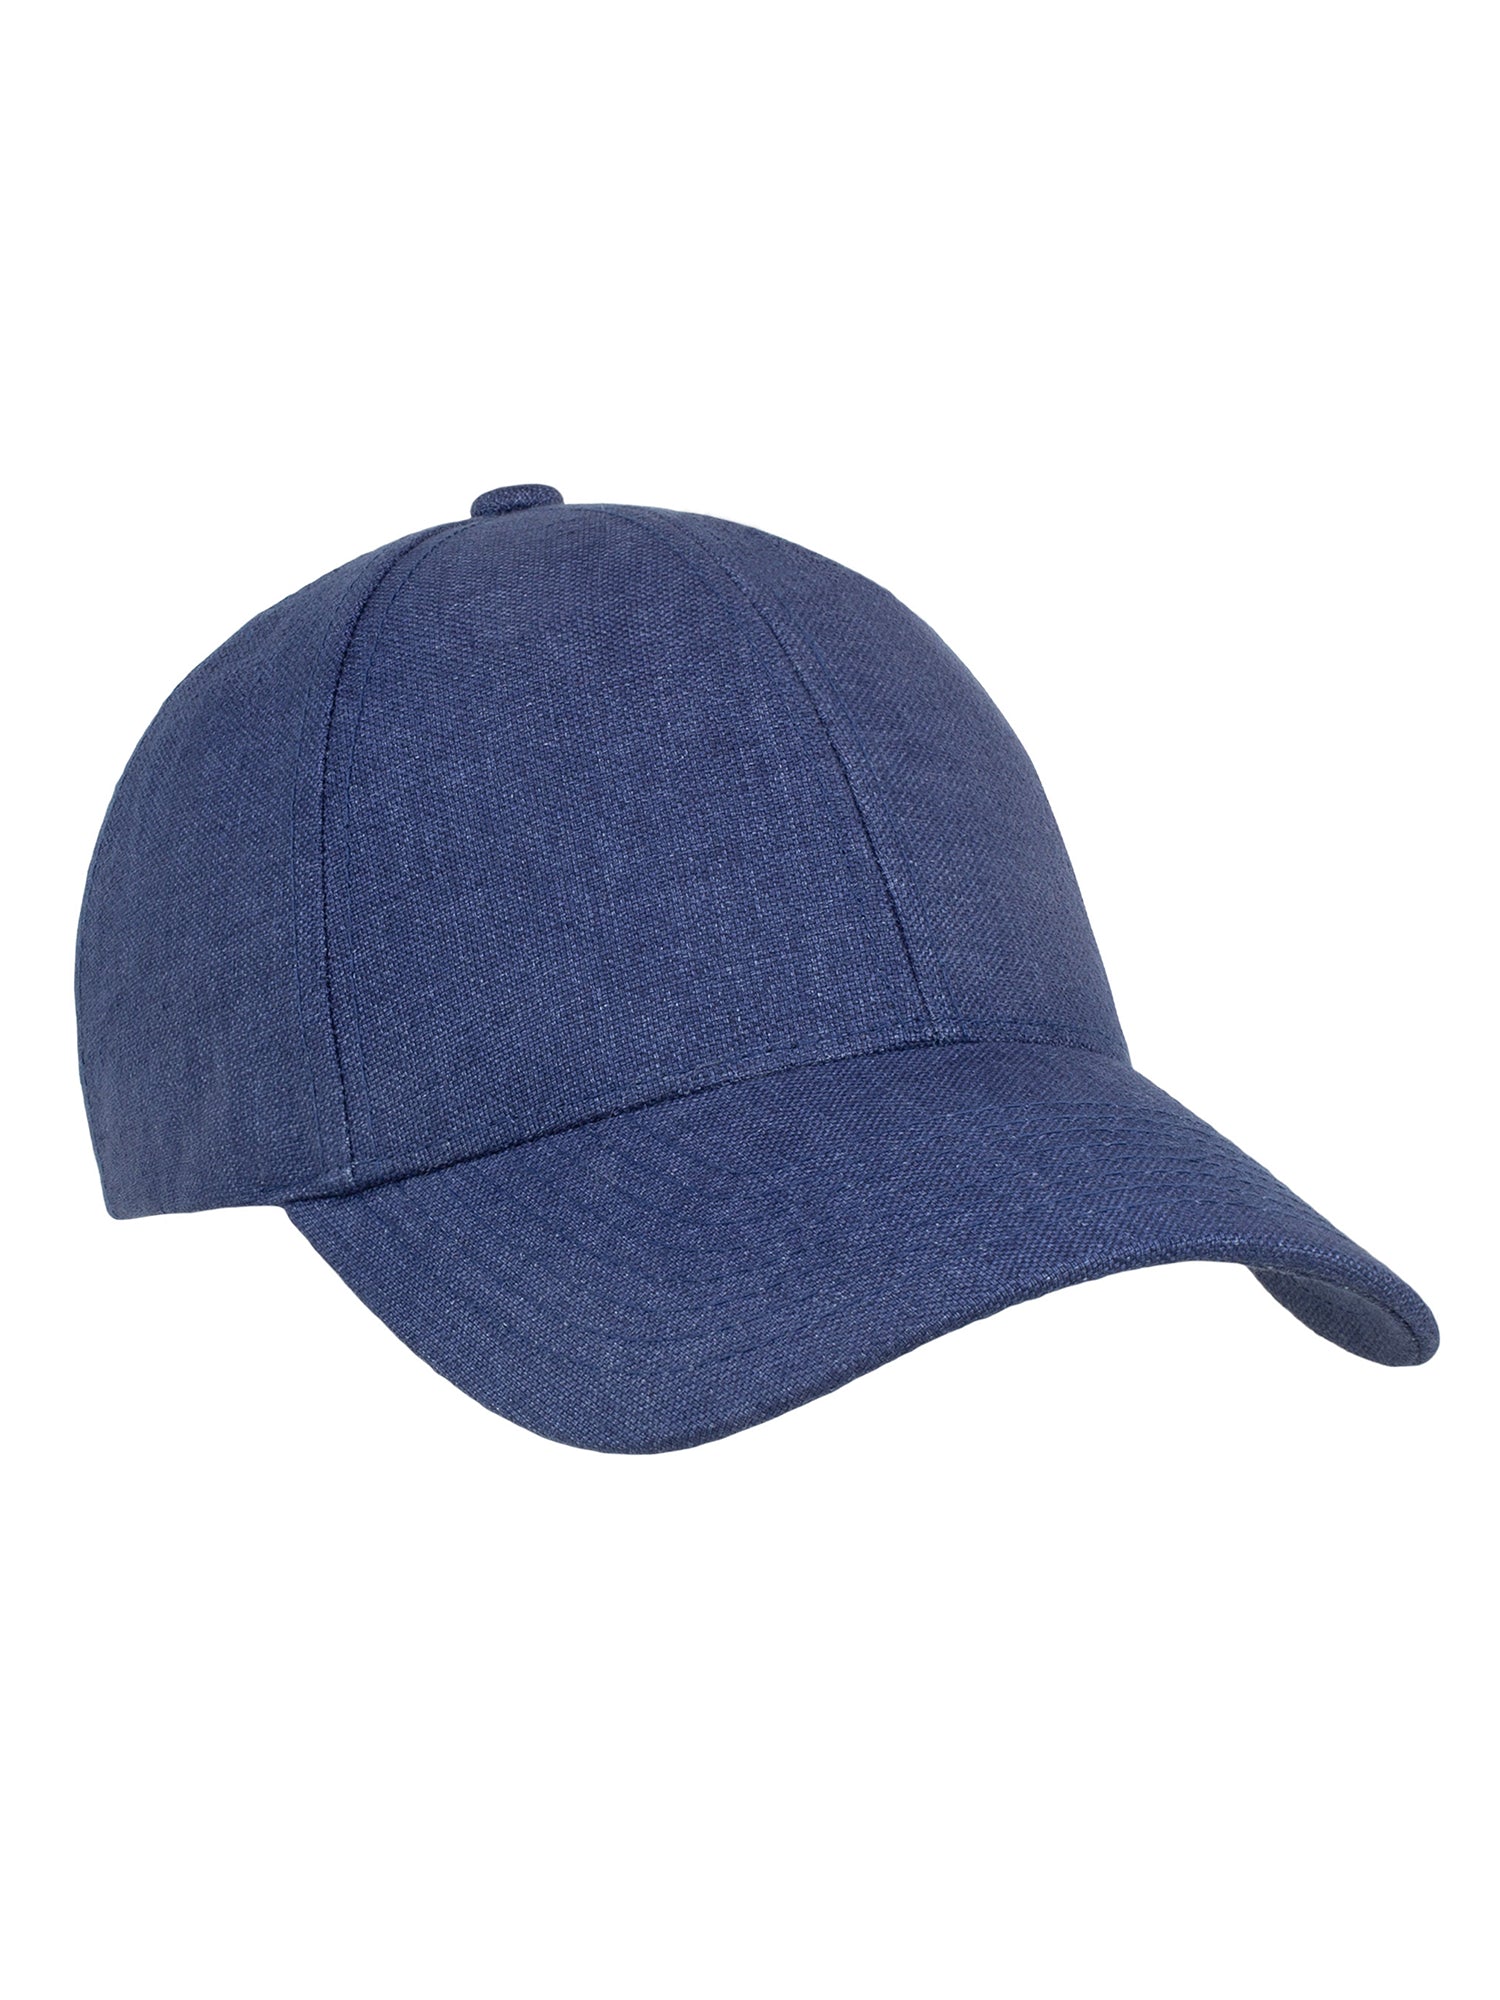 Linen Oxford Blue Cap